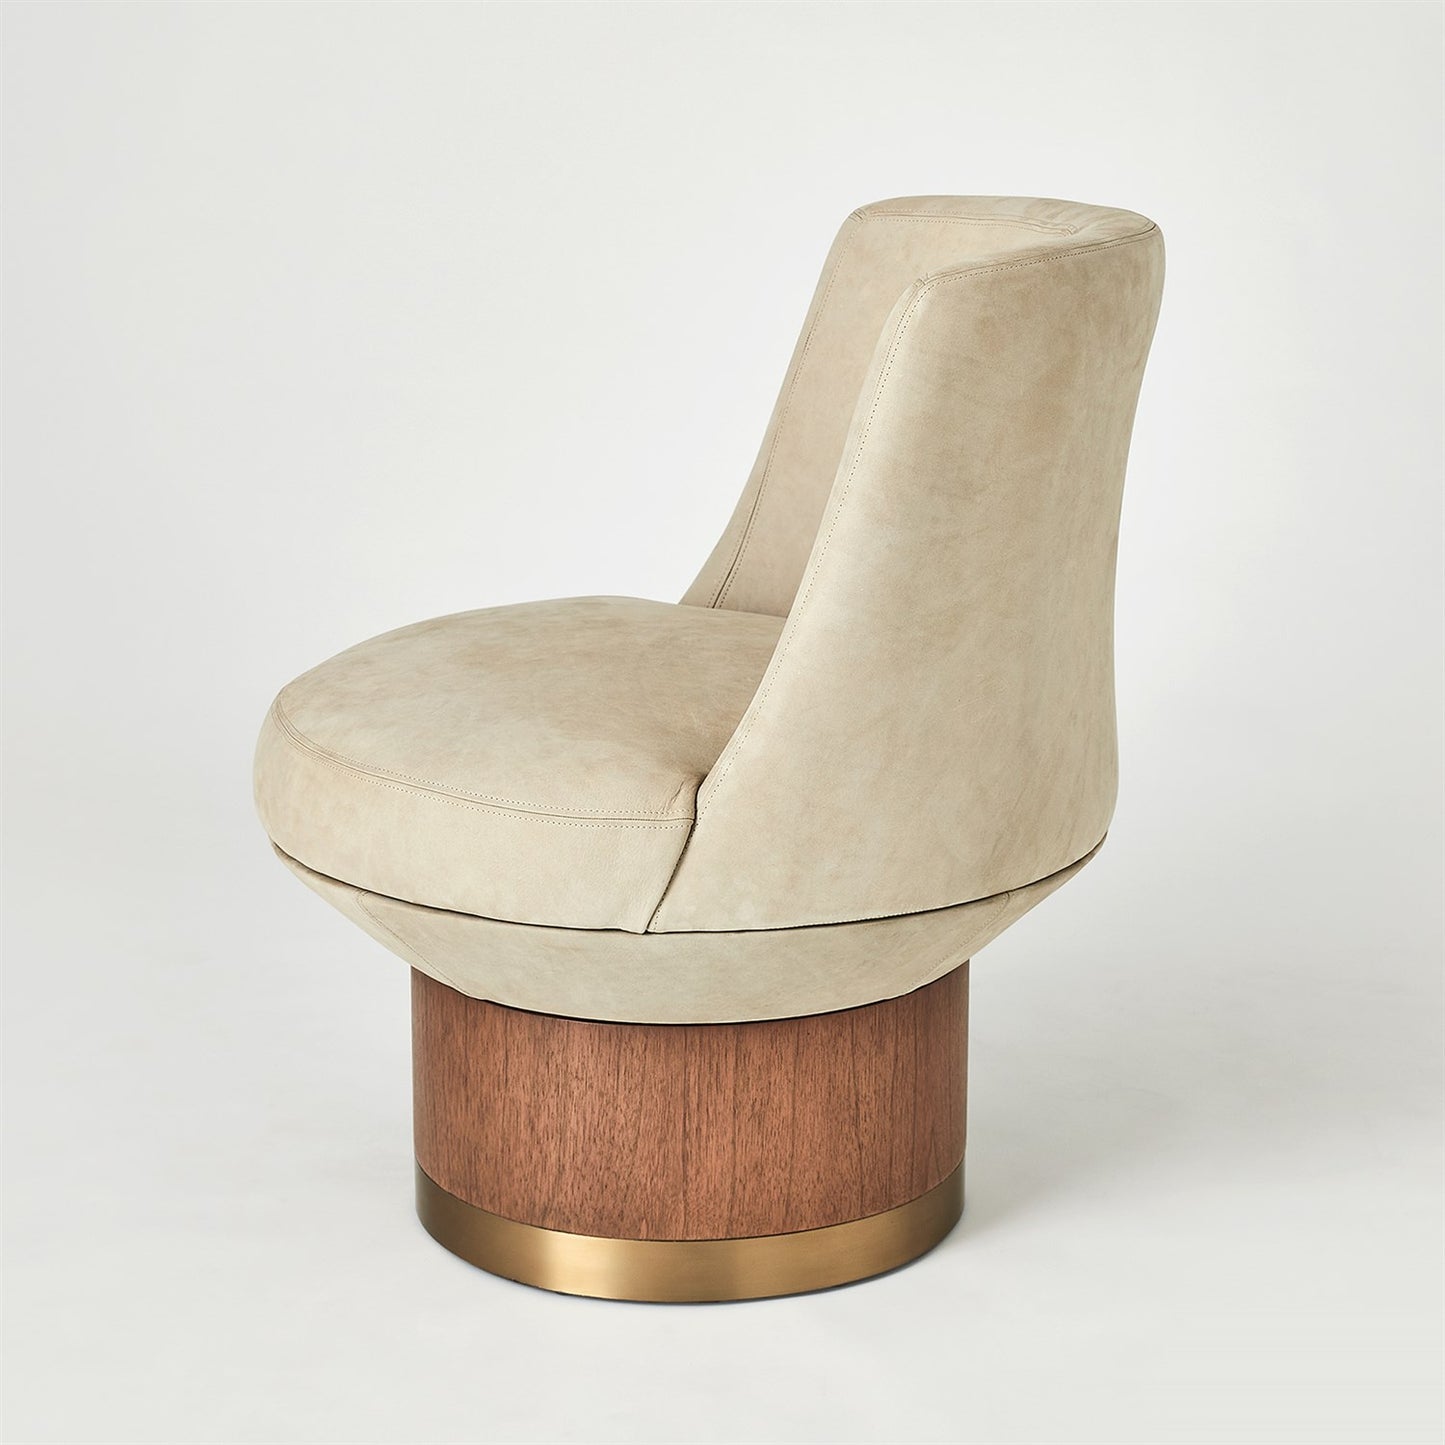 Brado Round Swivel Chair - Burlap Leather